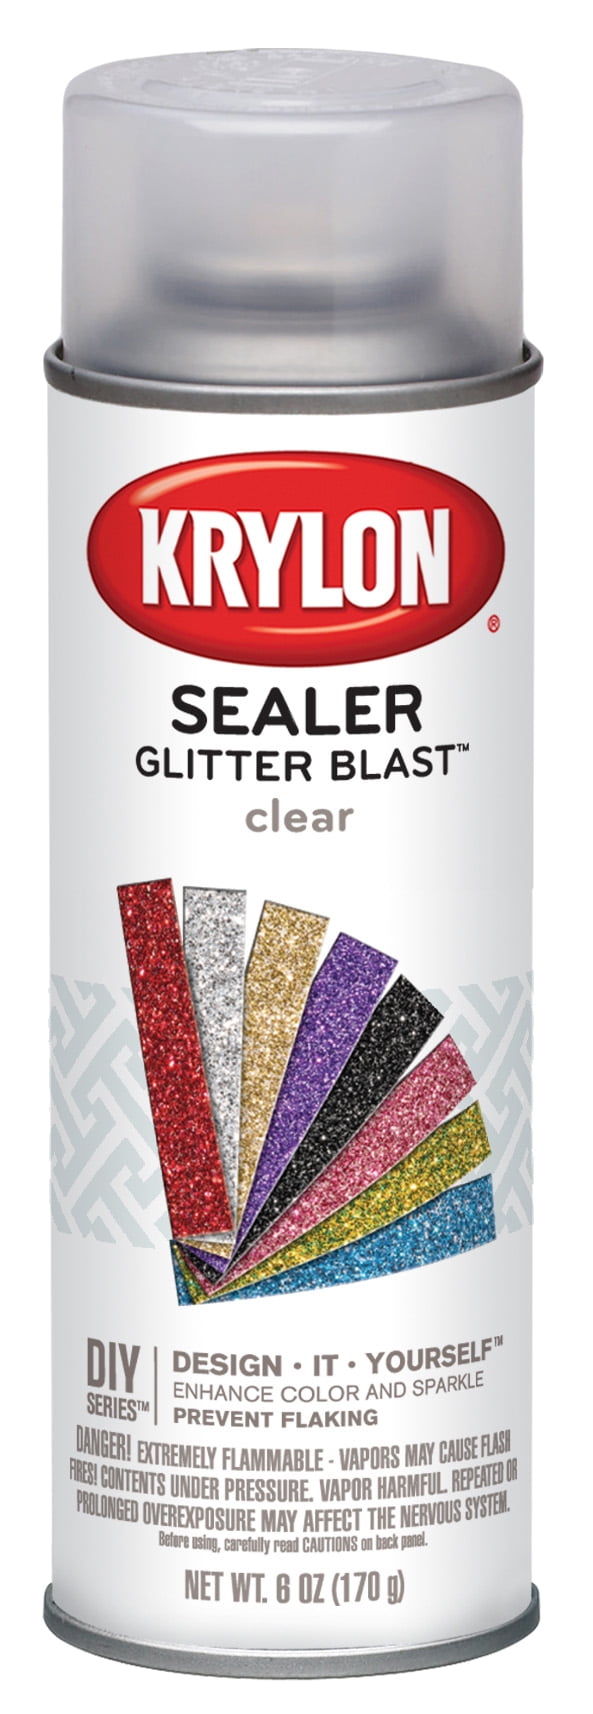 Krylon Crystal Clear Acrylic Coating Aerosol Spray, Snap and Spray